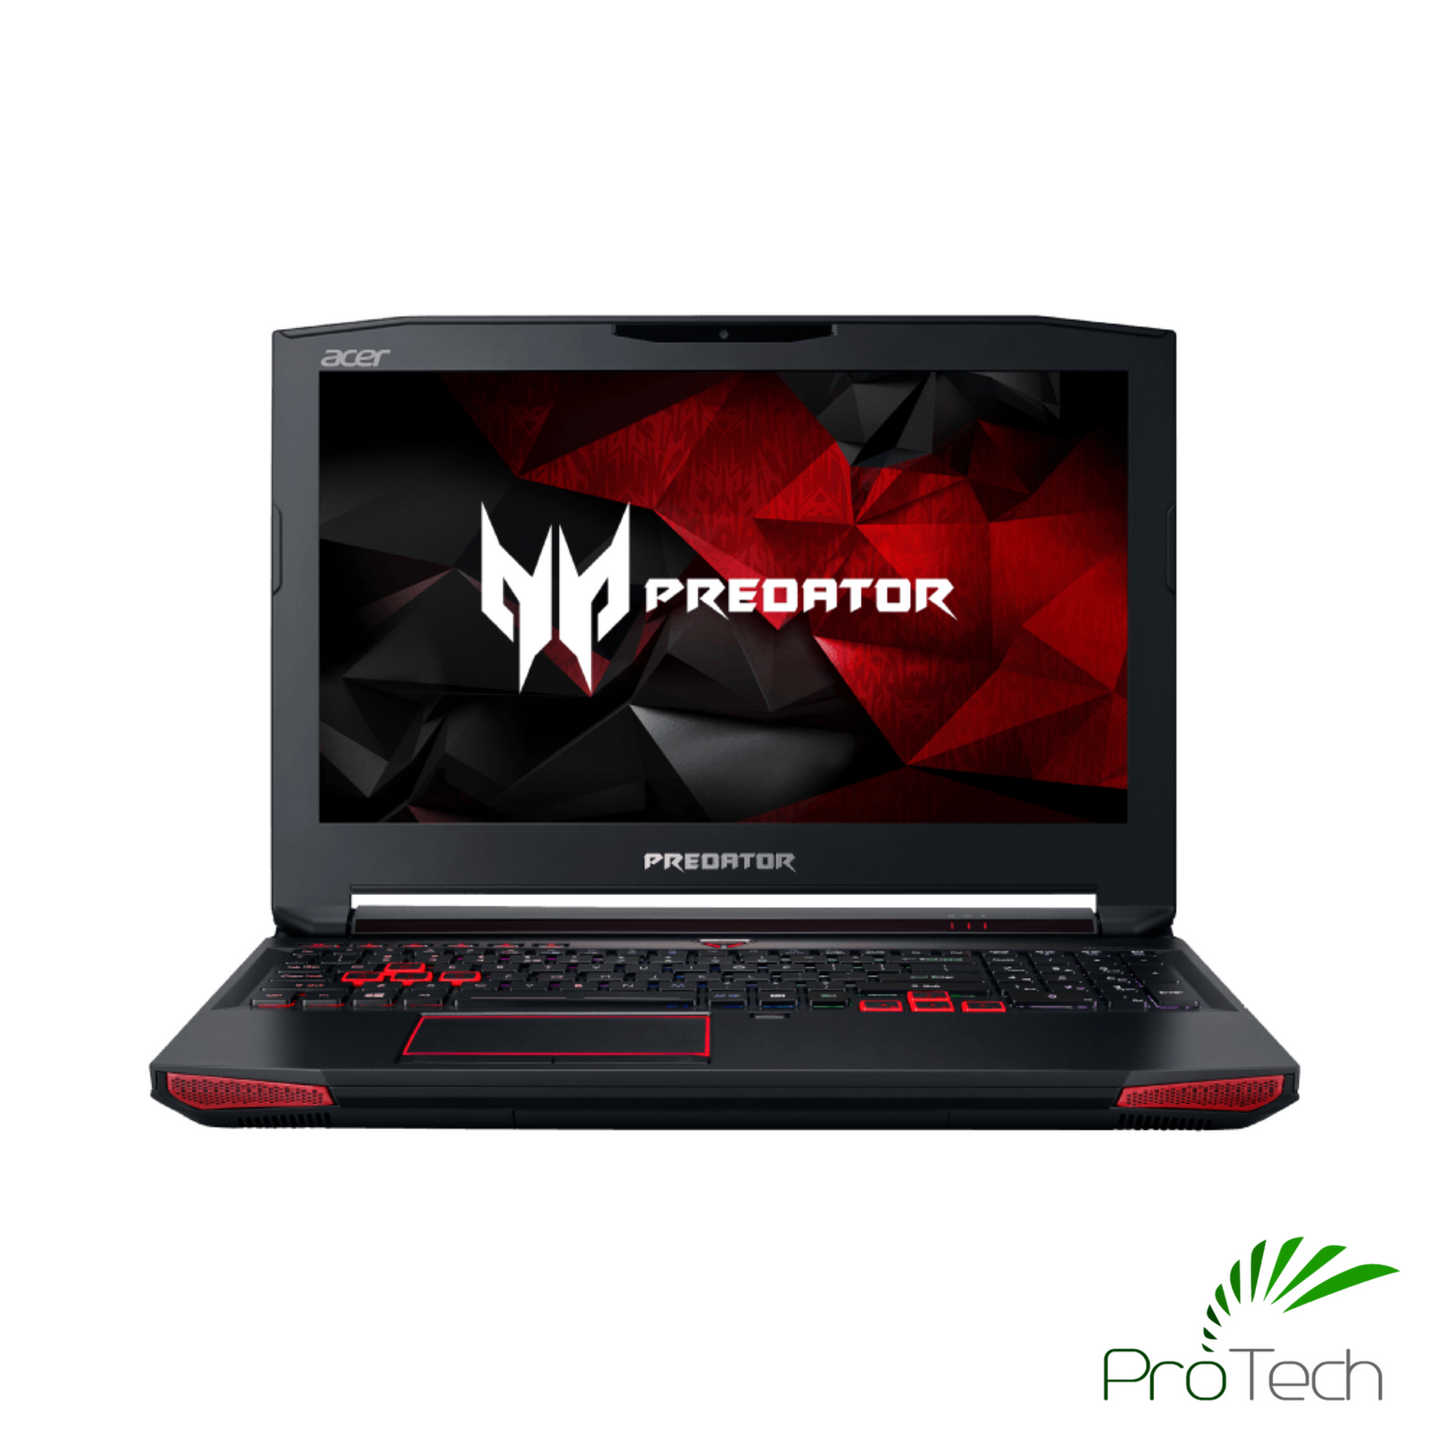 Acer Predator 17 G9-793 17.3" | Core i7 | 16GB RAM | 128GB SSD + 1TB HDD ProTech IT Solutions